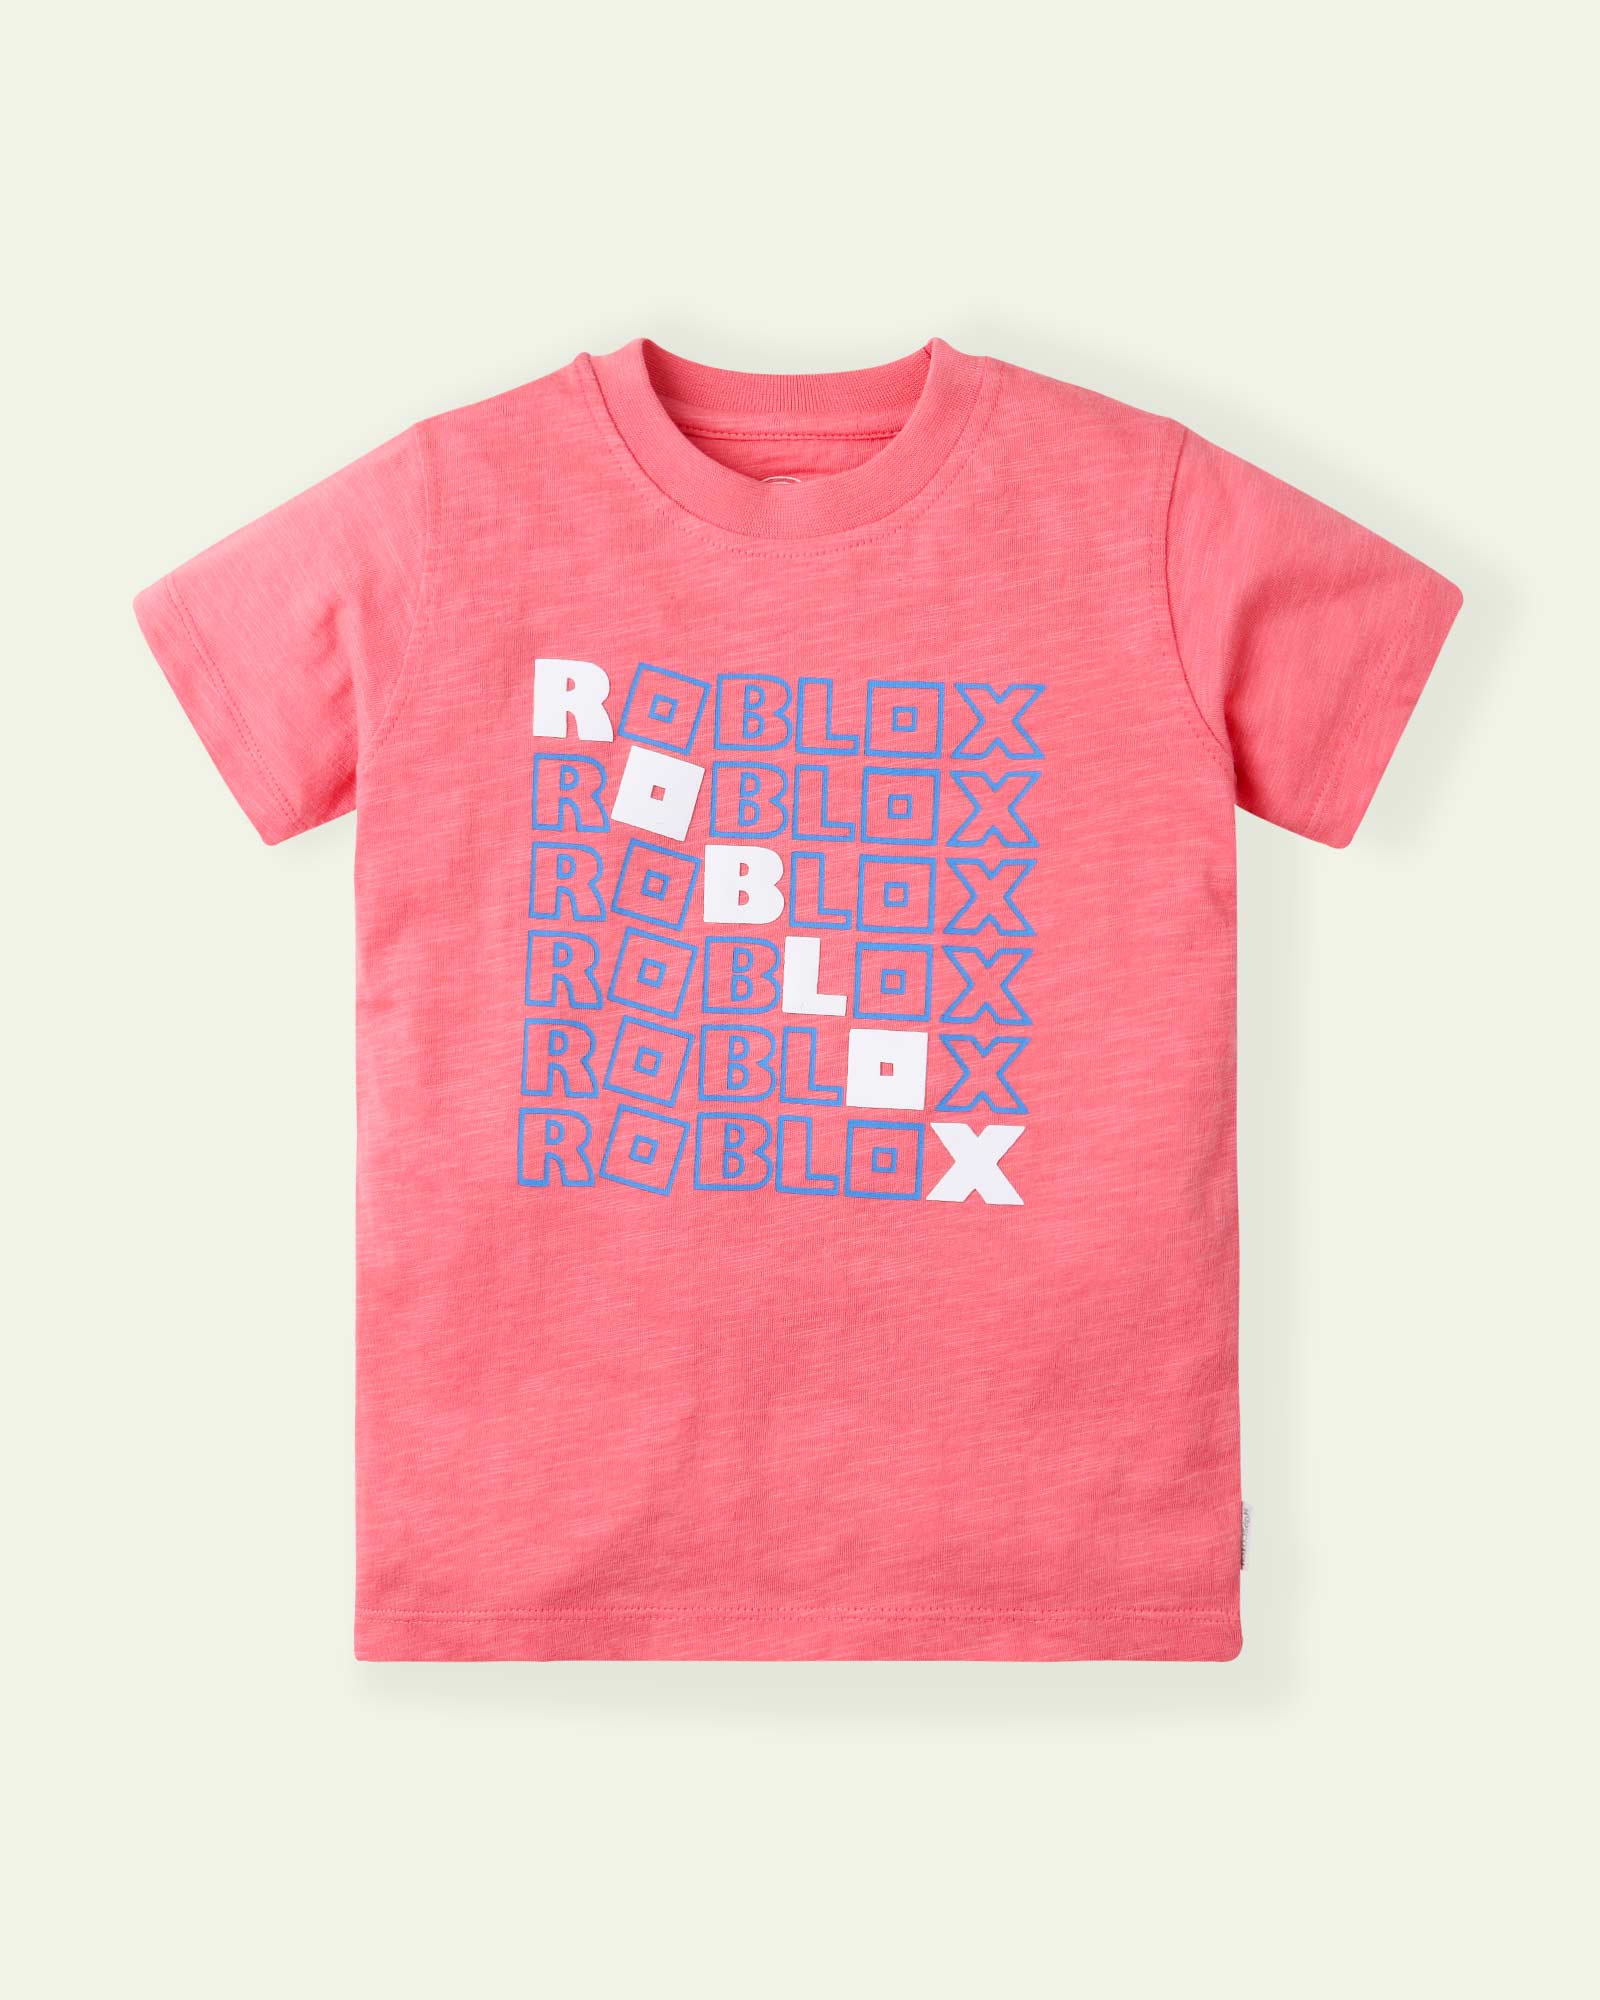 Pin by ㅤ on R0BL0X T-SH1RTS  Roblox shirt, Roblox t-shirt, Free